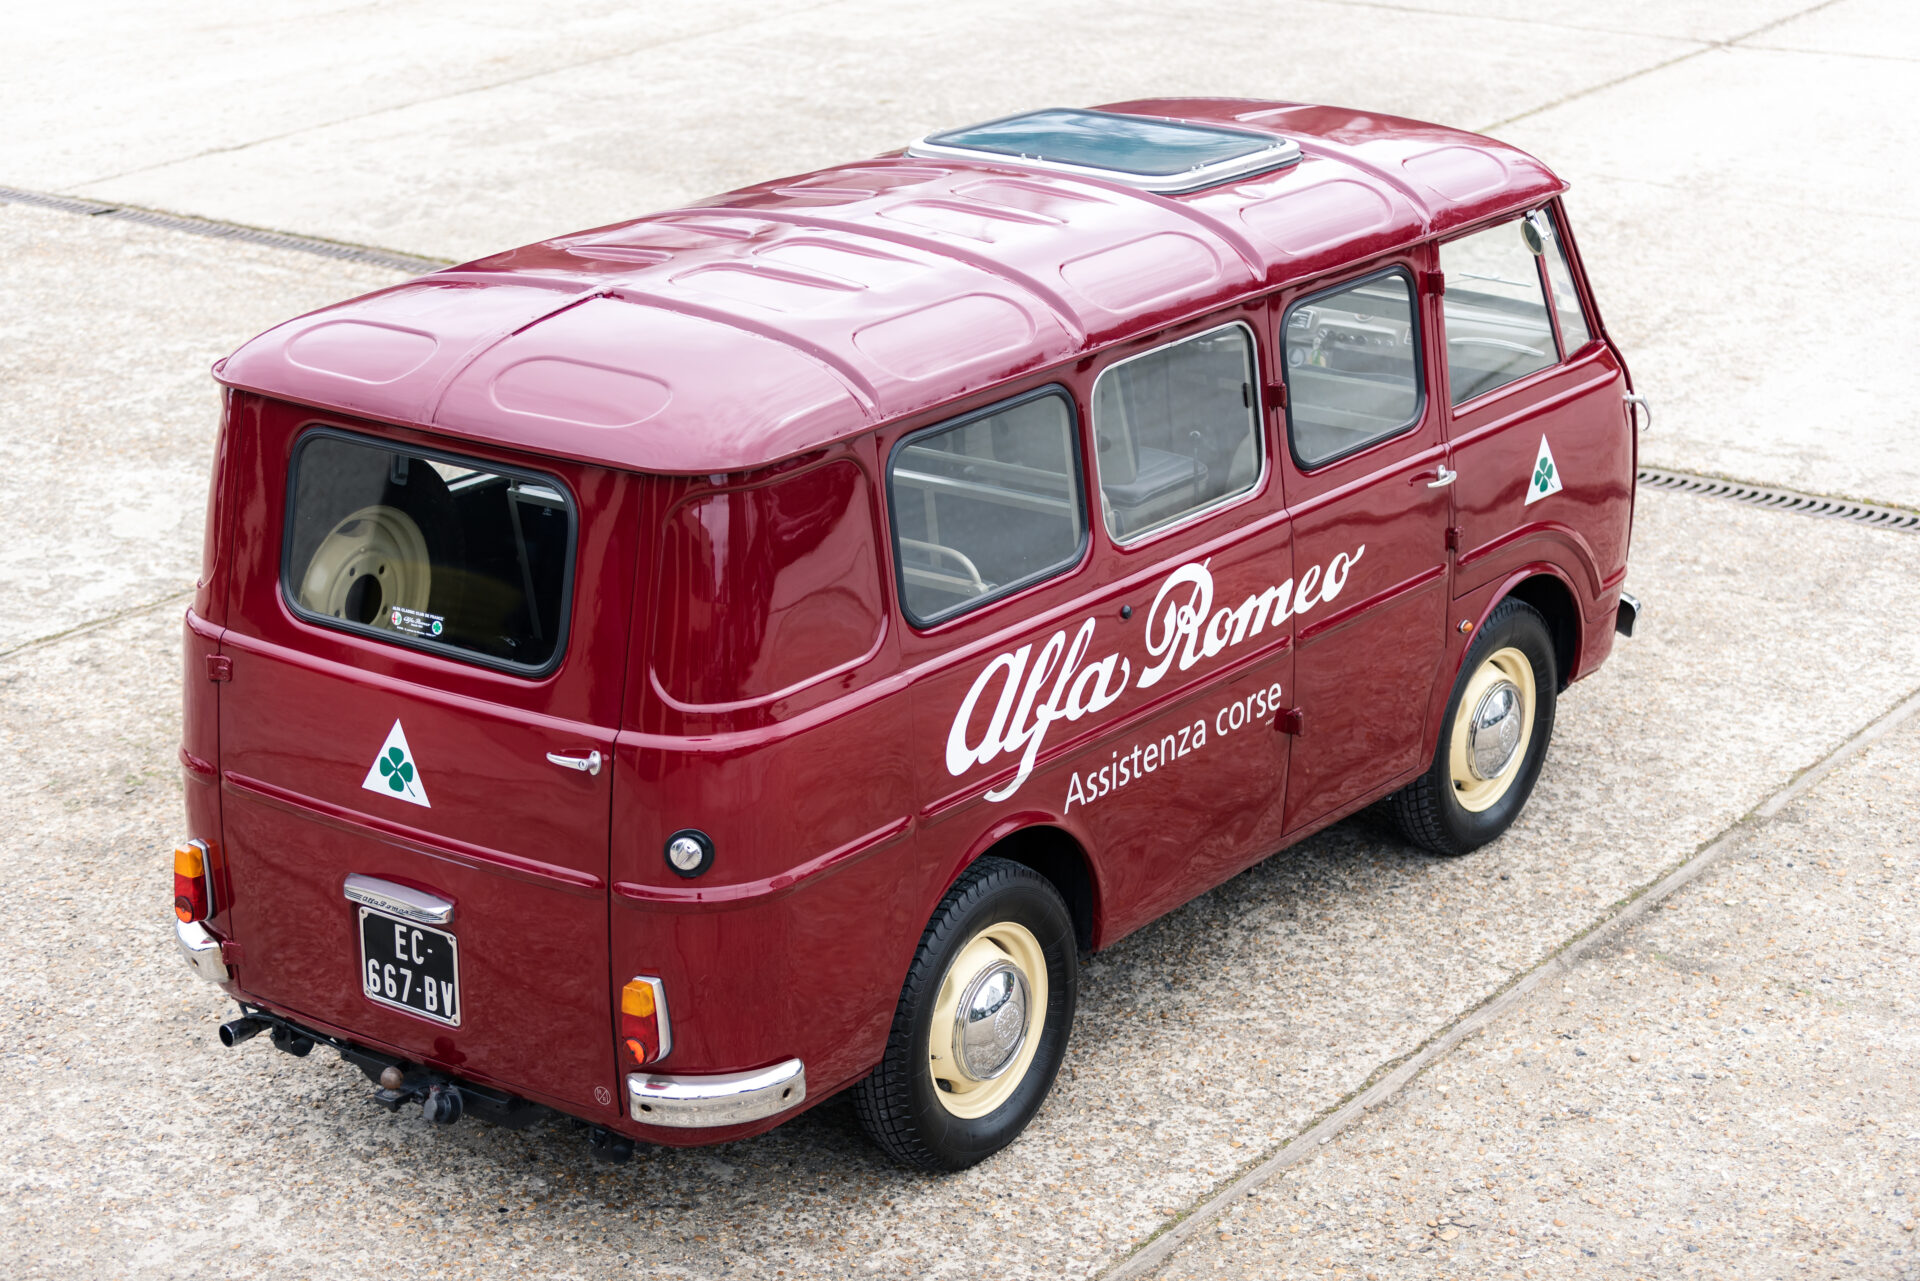 1961 Alfa Romeo Romeo 2 "Autotutto" Minivan